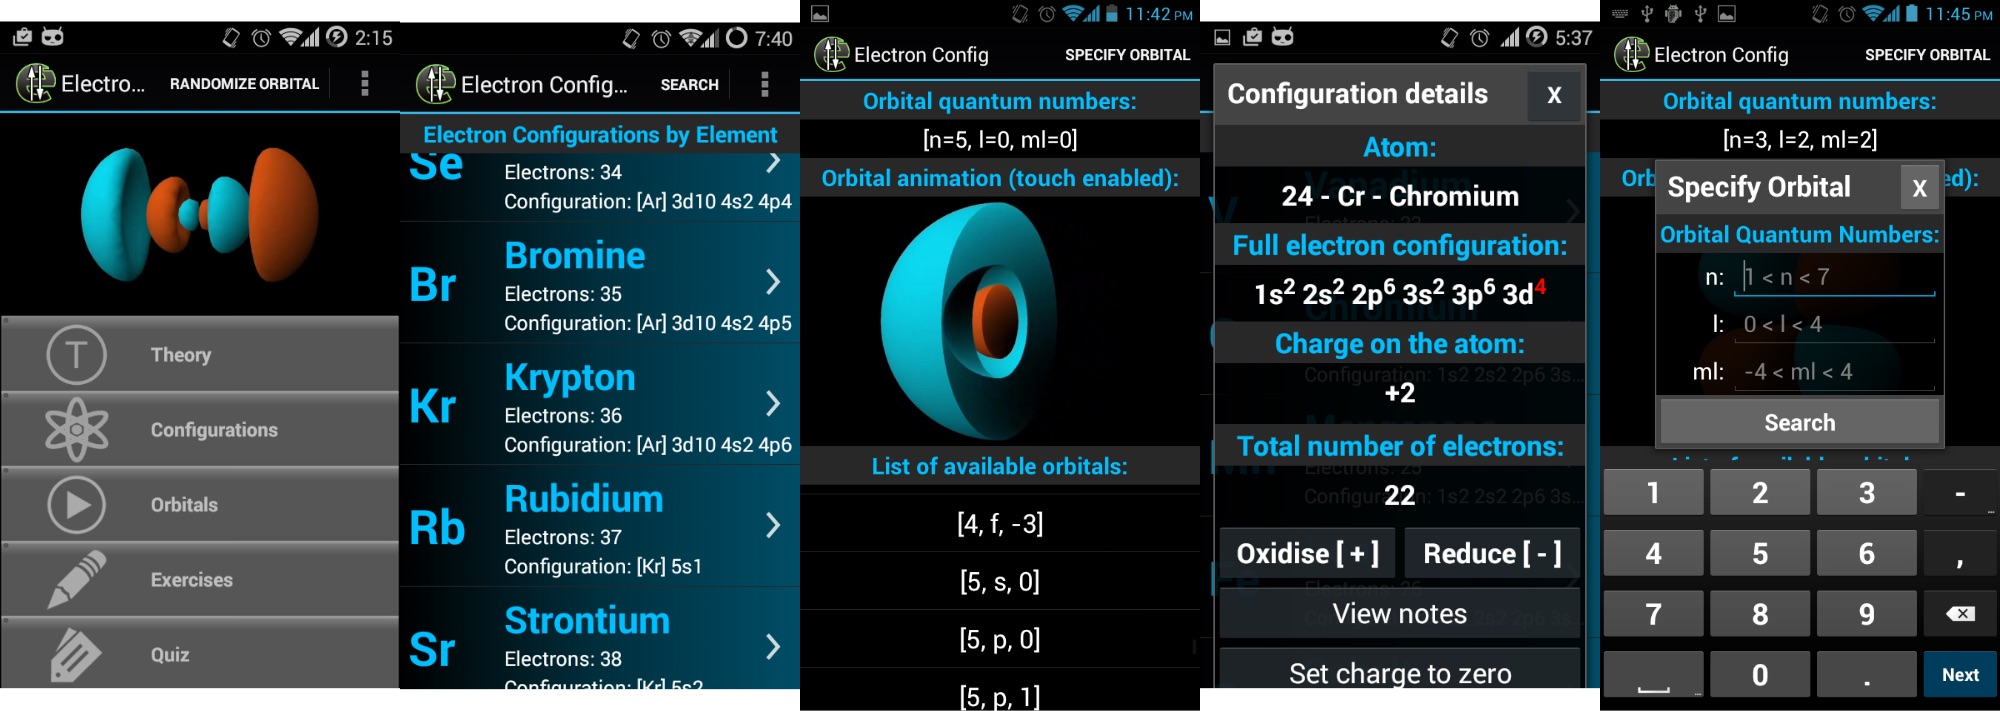 Electron Config PRO dla Androida